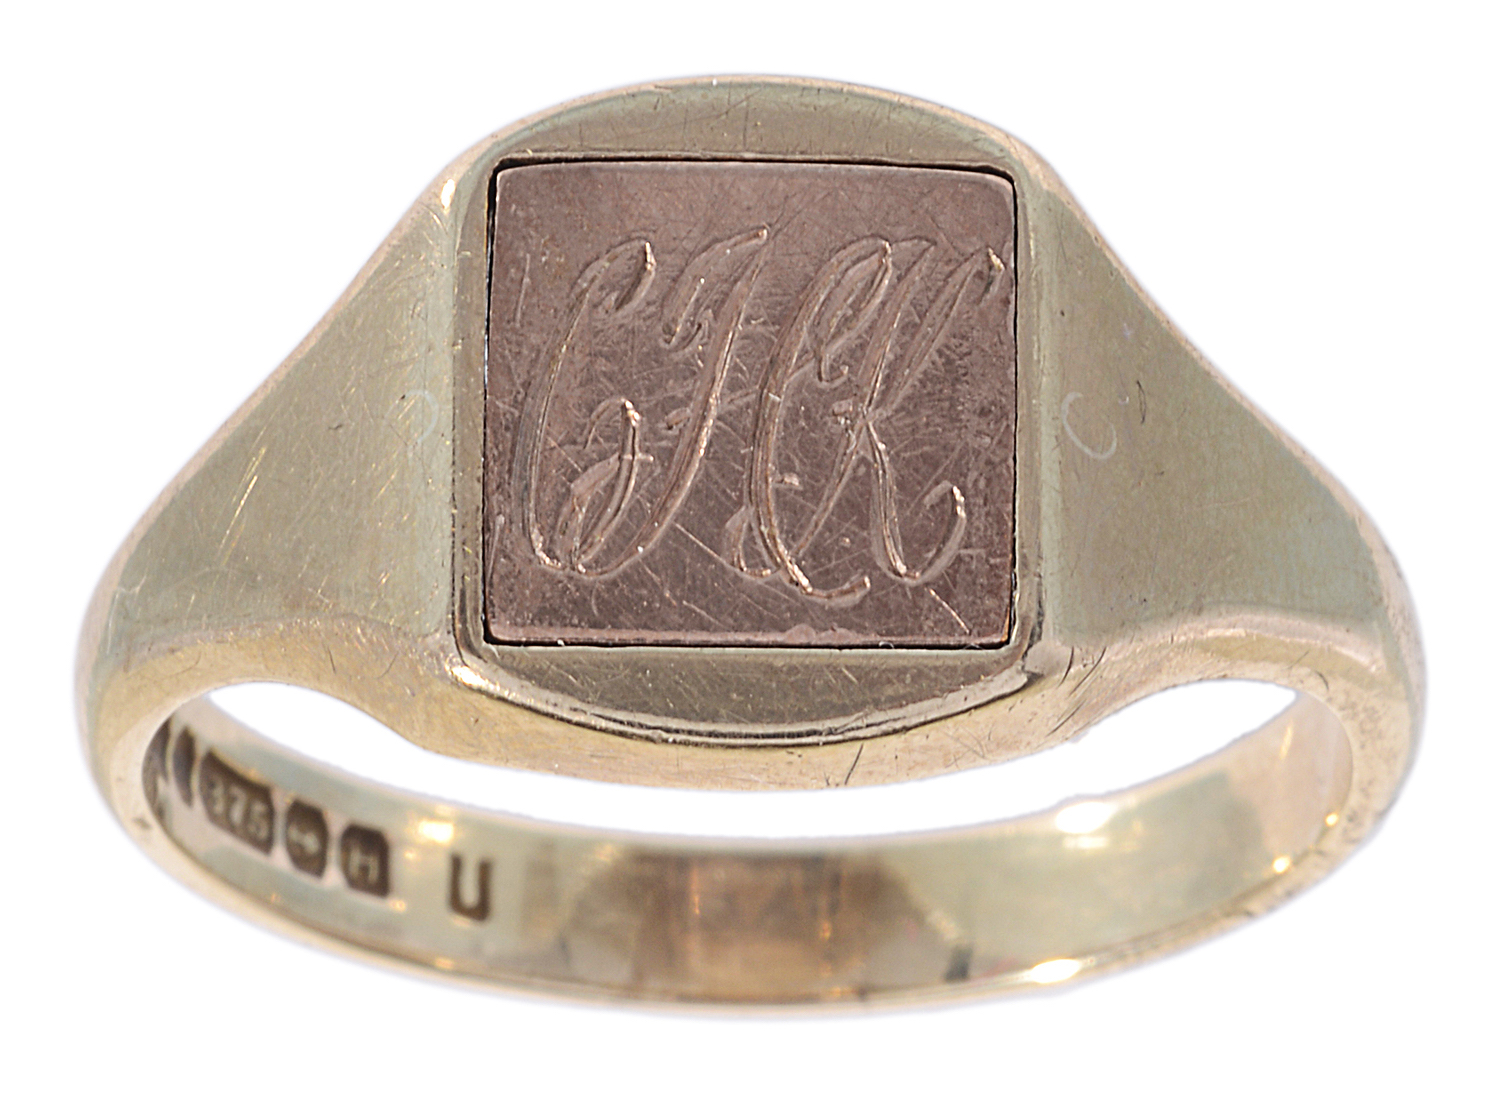 A gentleman's 9ct gold Masonic reversible signet ring